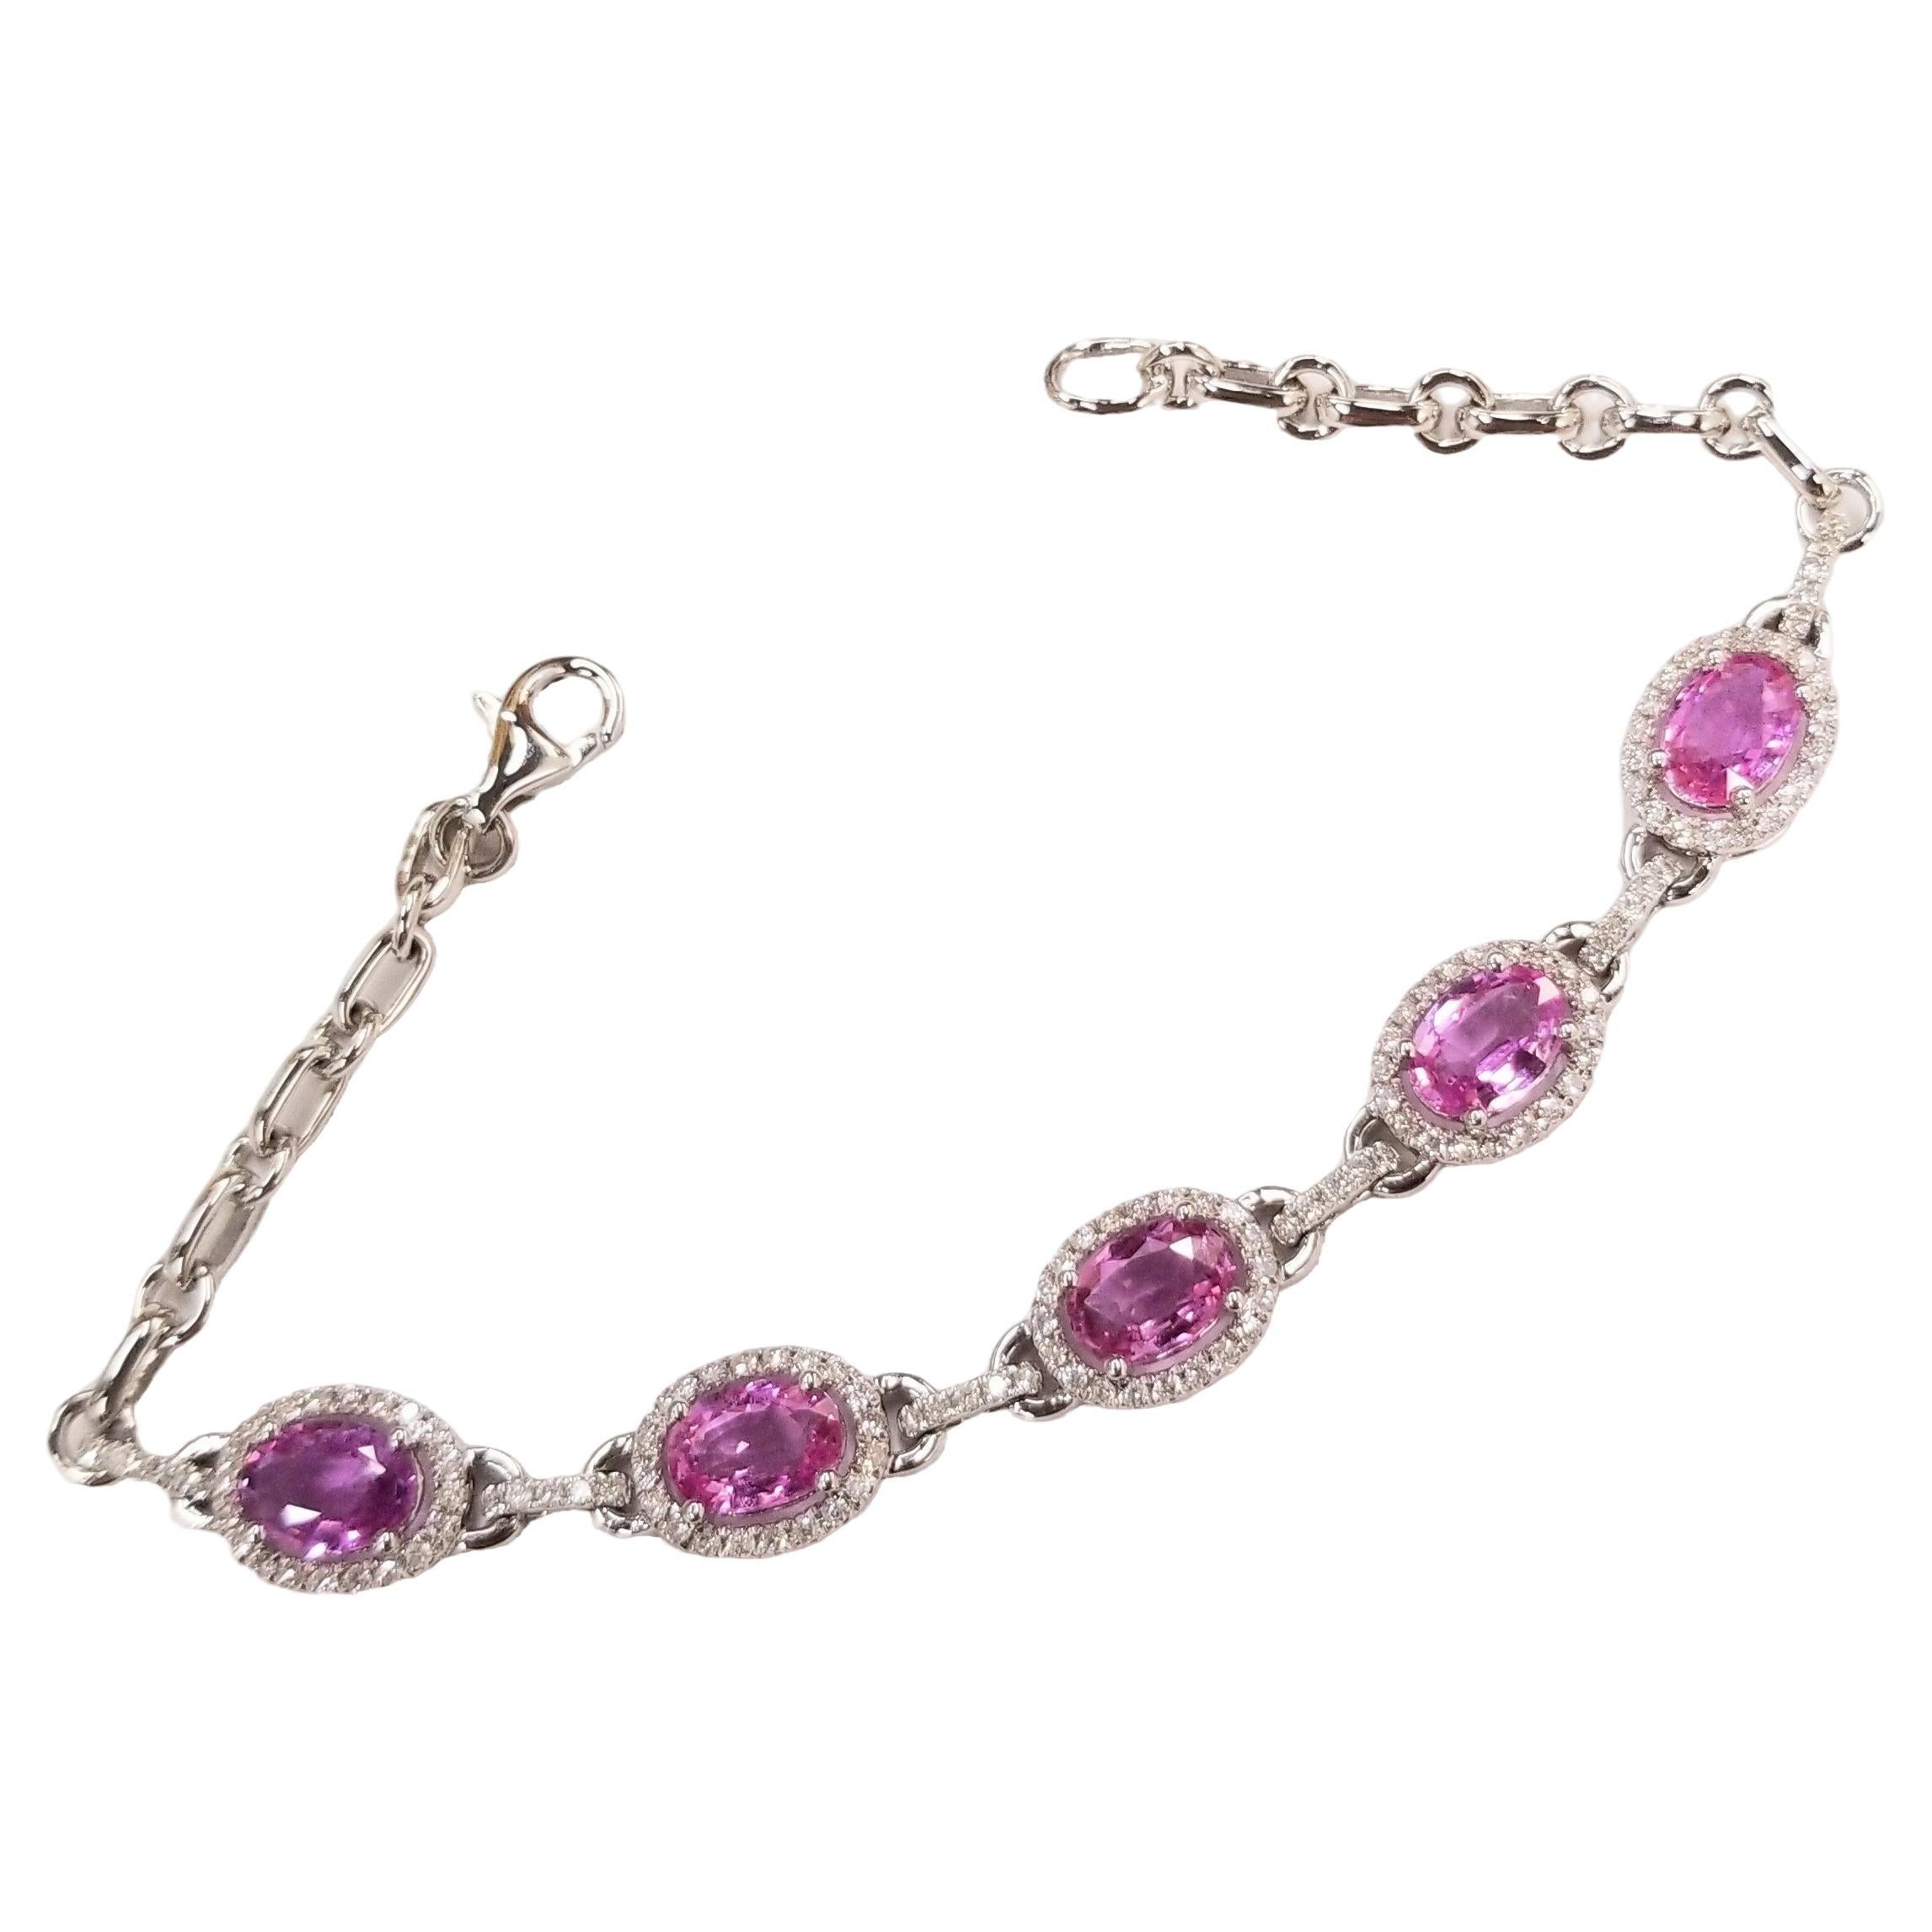 IGI Certified 4.24 Carat Pink Sapphire & Diamond Bracelet in 18K White Gold For Sale